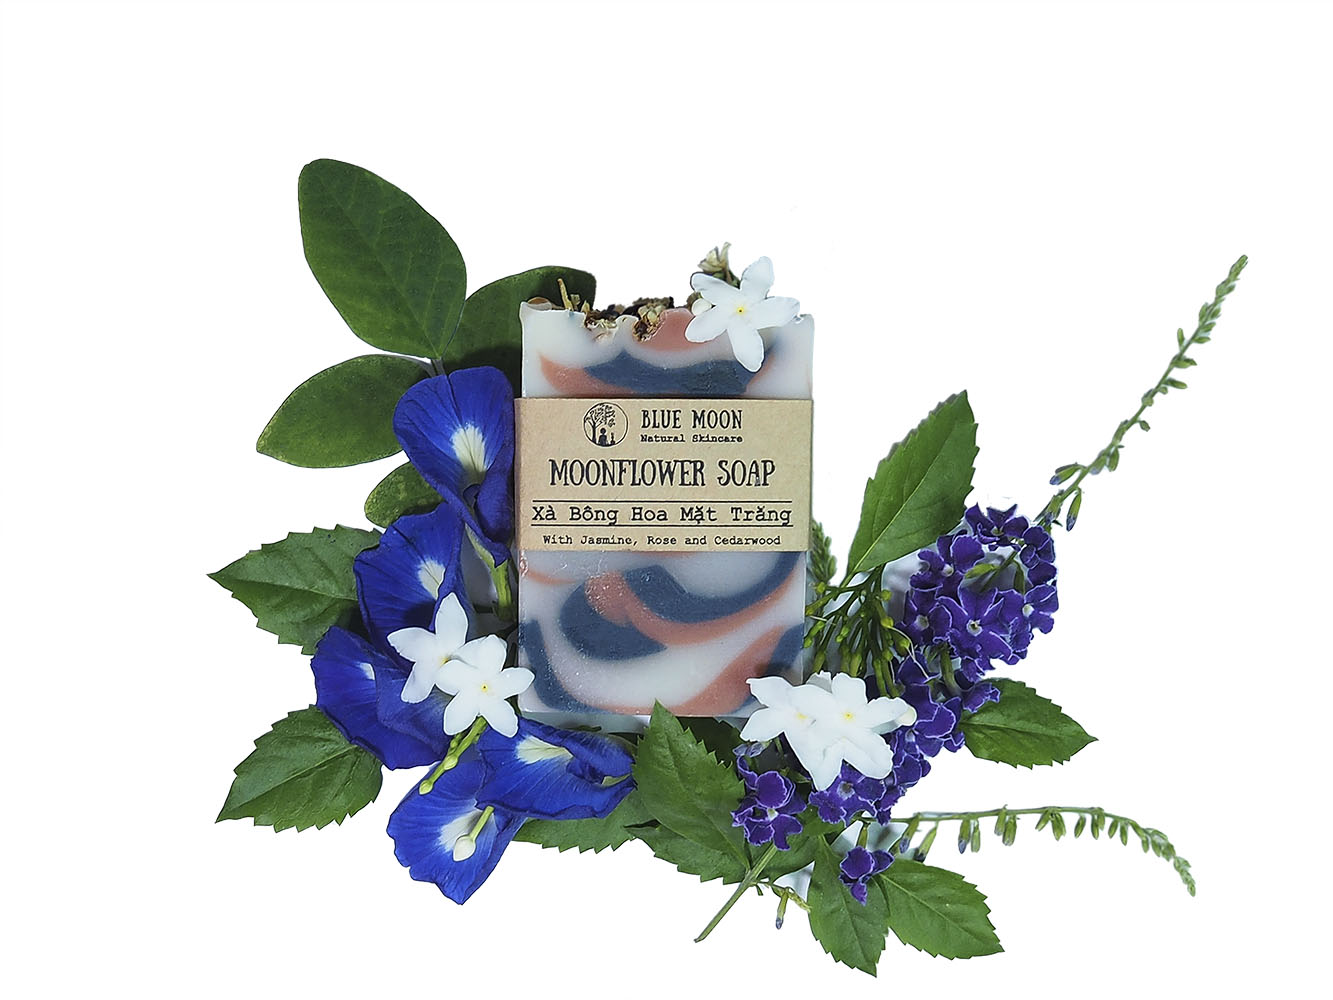 Moonflower soap - Blue Moon Natural Skincare